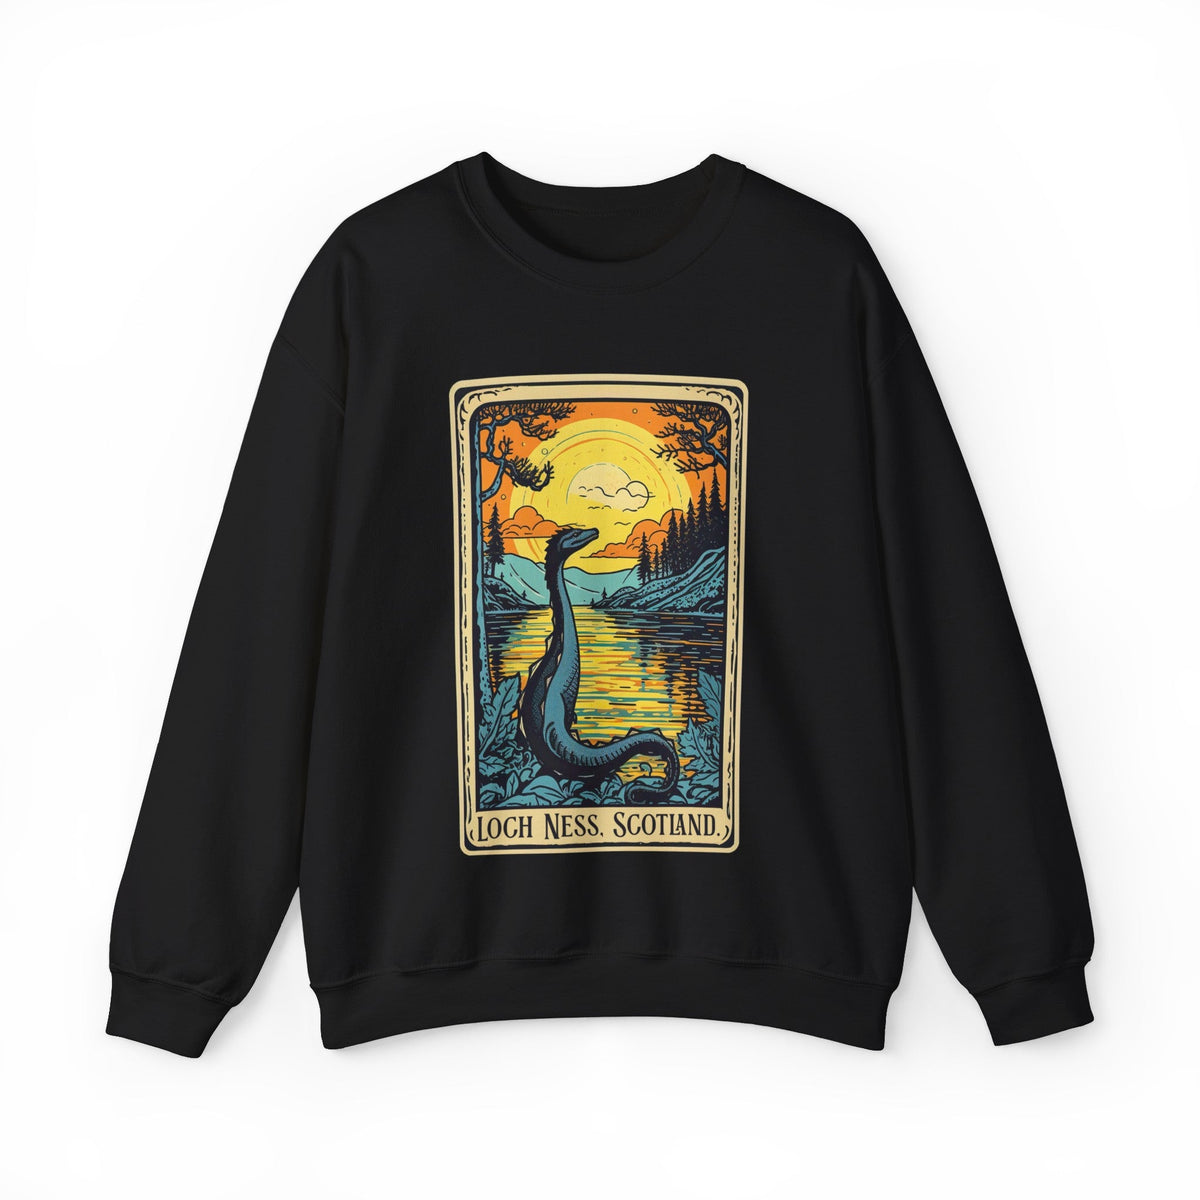 Loch Ness Monster Tarot Crew Neck Sweatshirt - Goth Cloth Co.Sweatshirt14857487031889631544